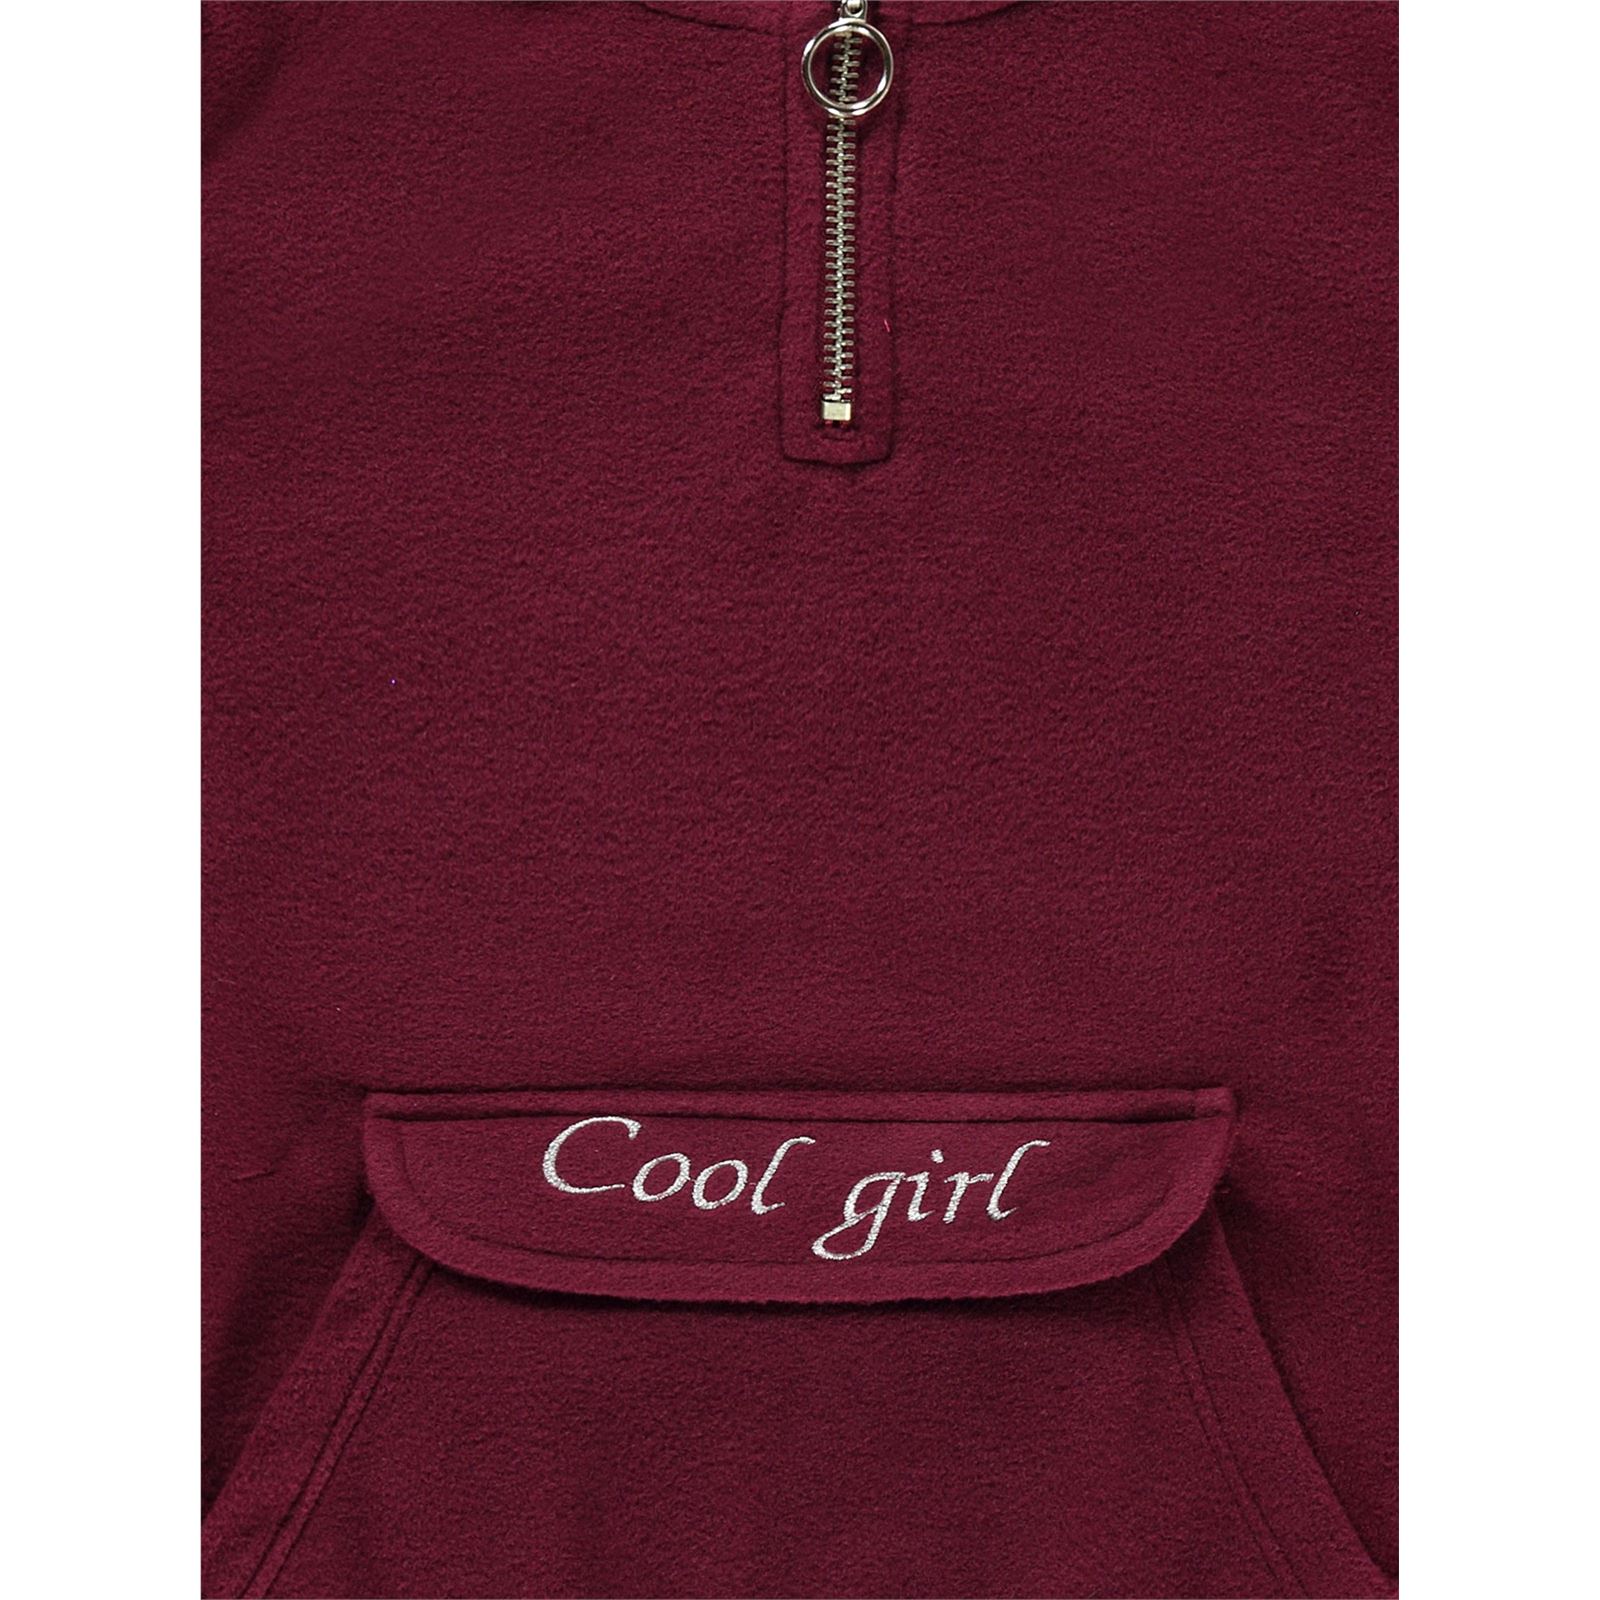 Civil Girls Kız Çocuk Sweatshirt 6-9 Yaş Mürdüm